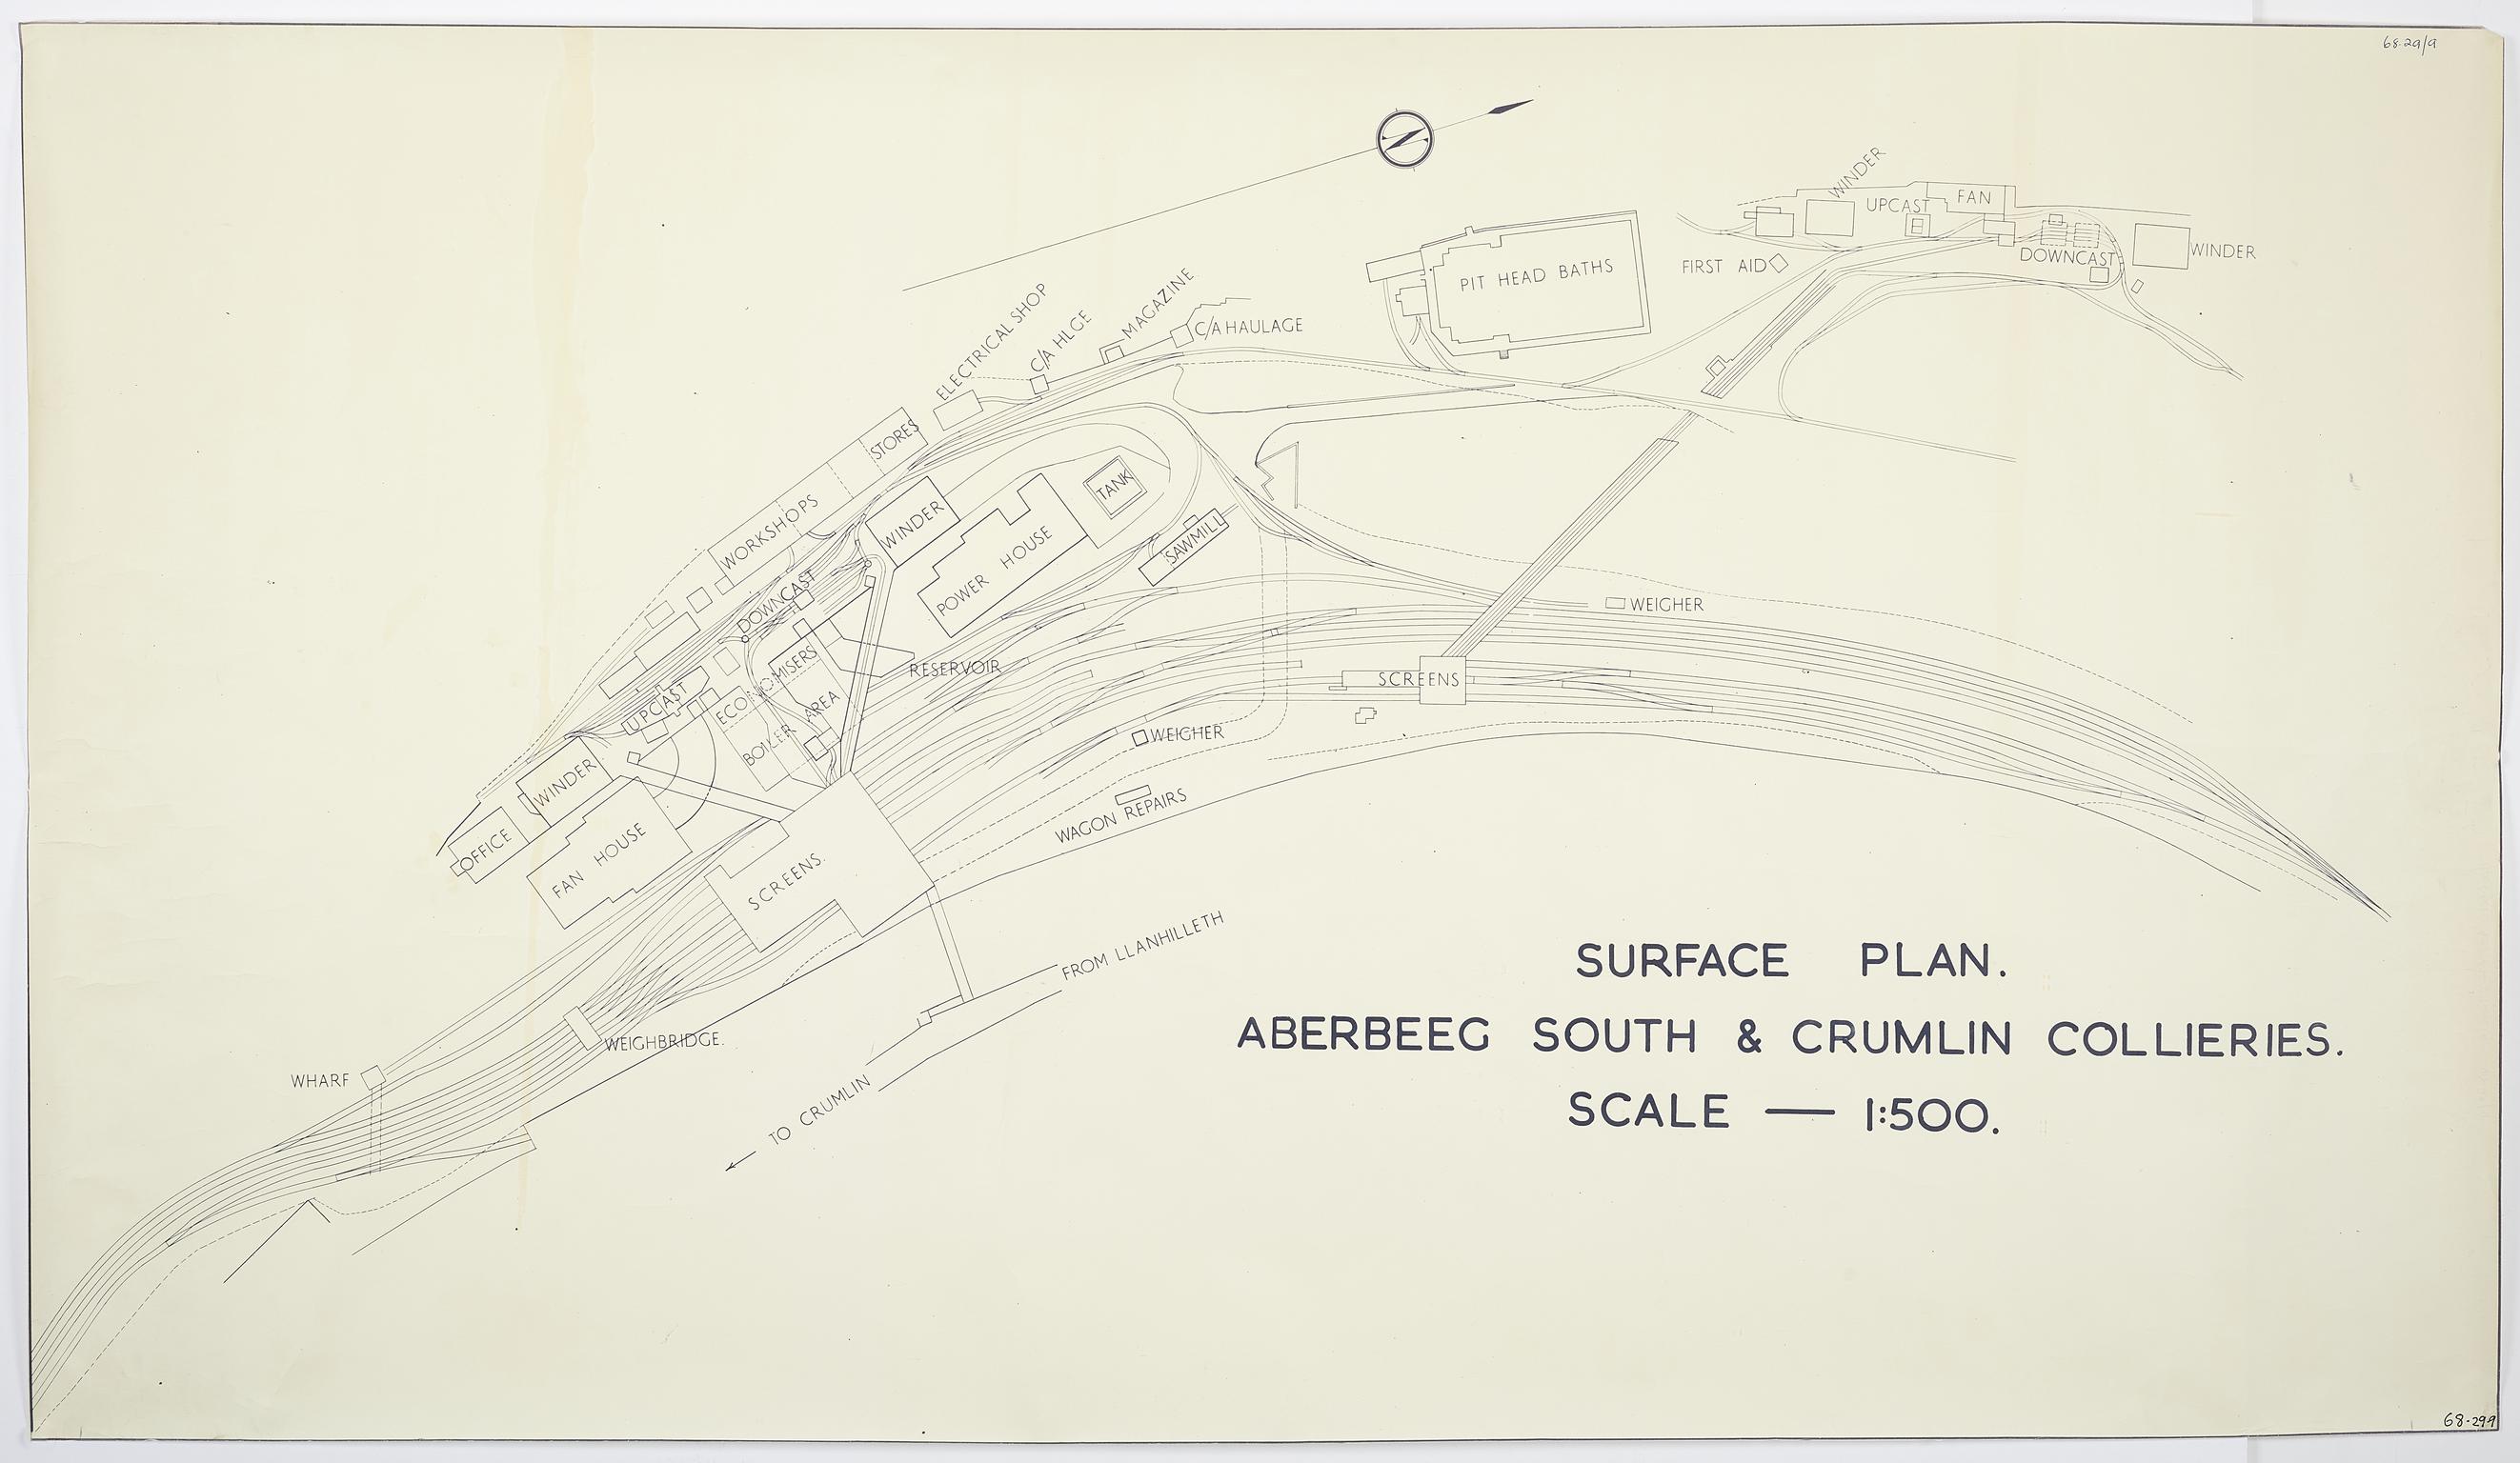 Aberbeeg South & Crumlin Collieries, plan